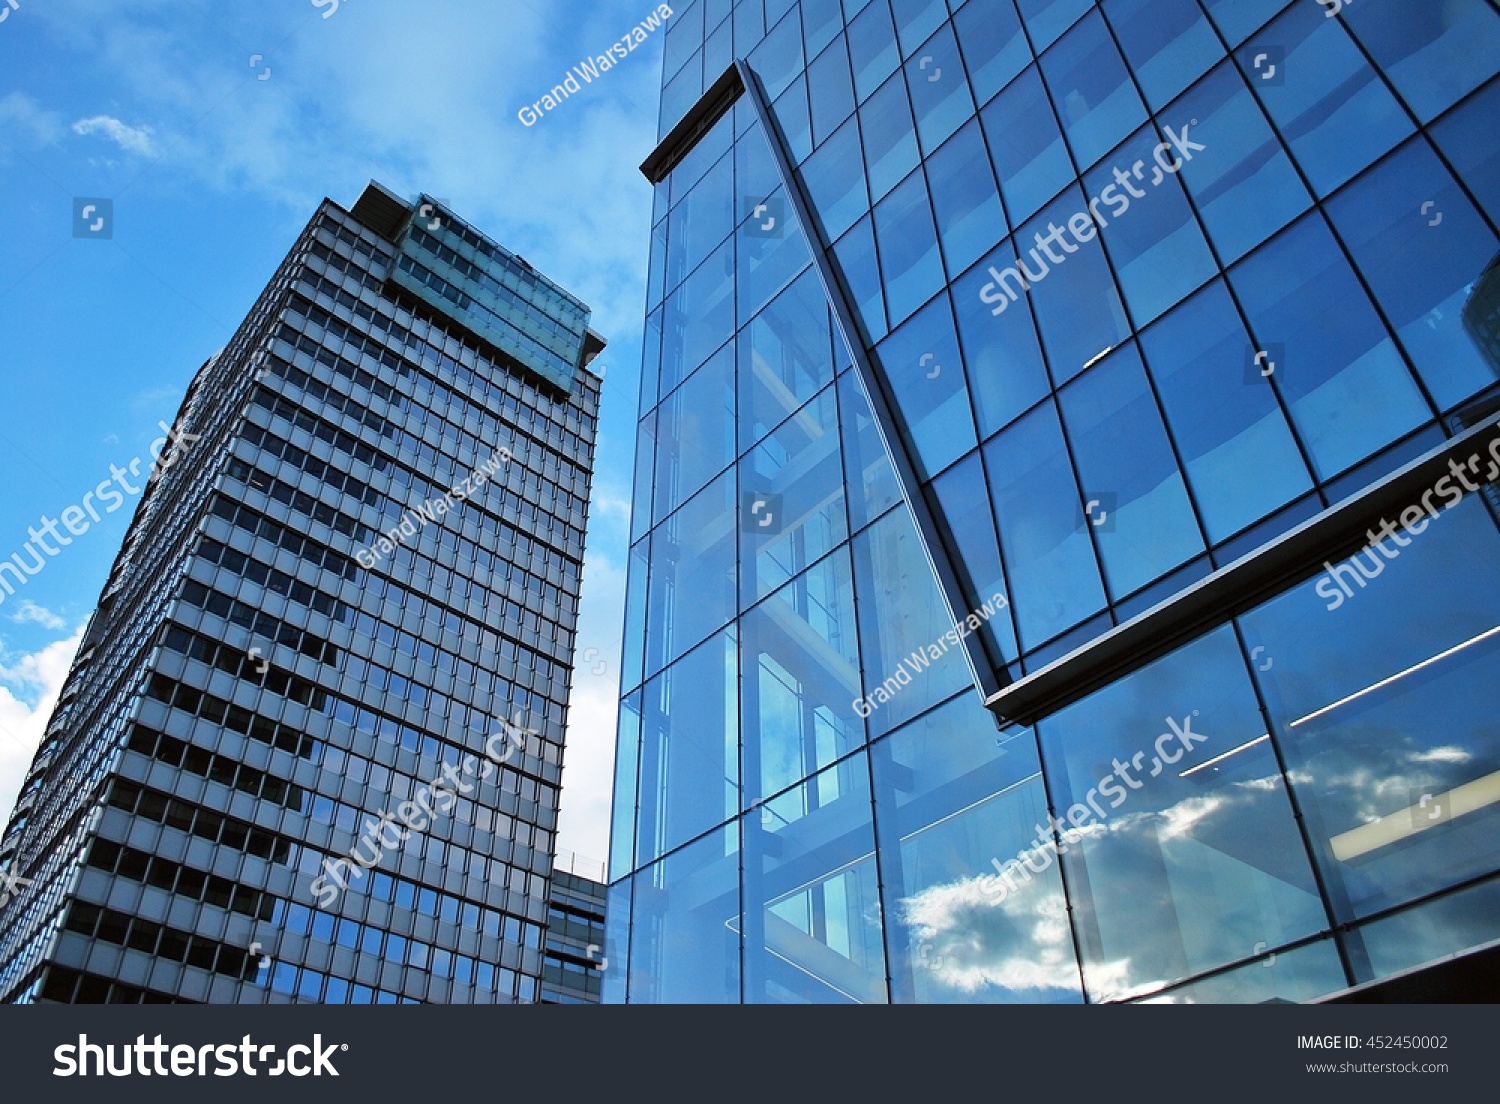 Skyscraper with glass facade. Modern building. #452450002